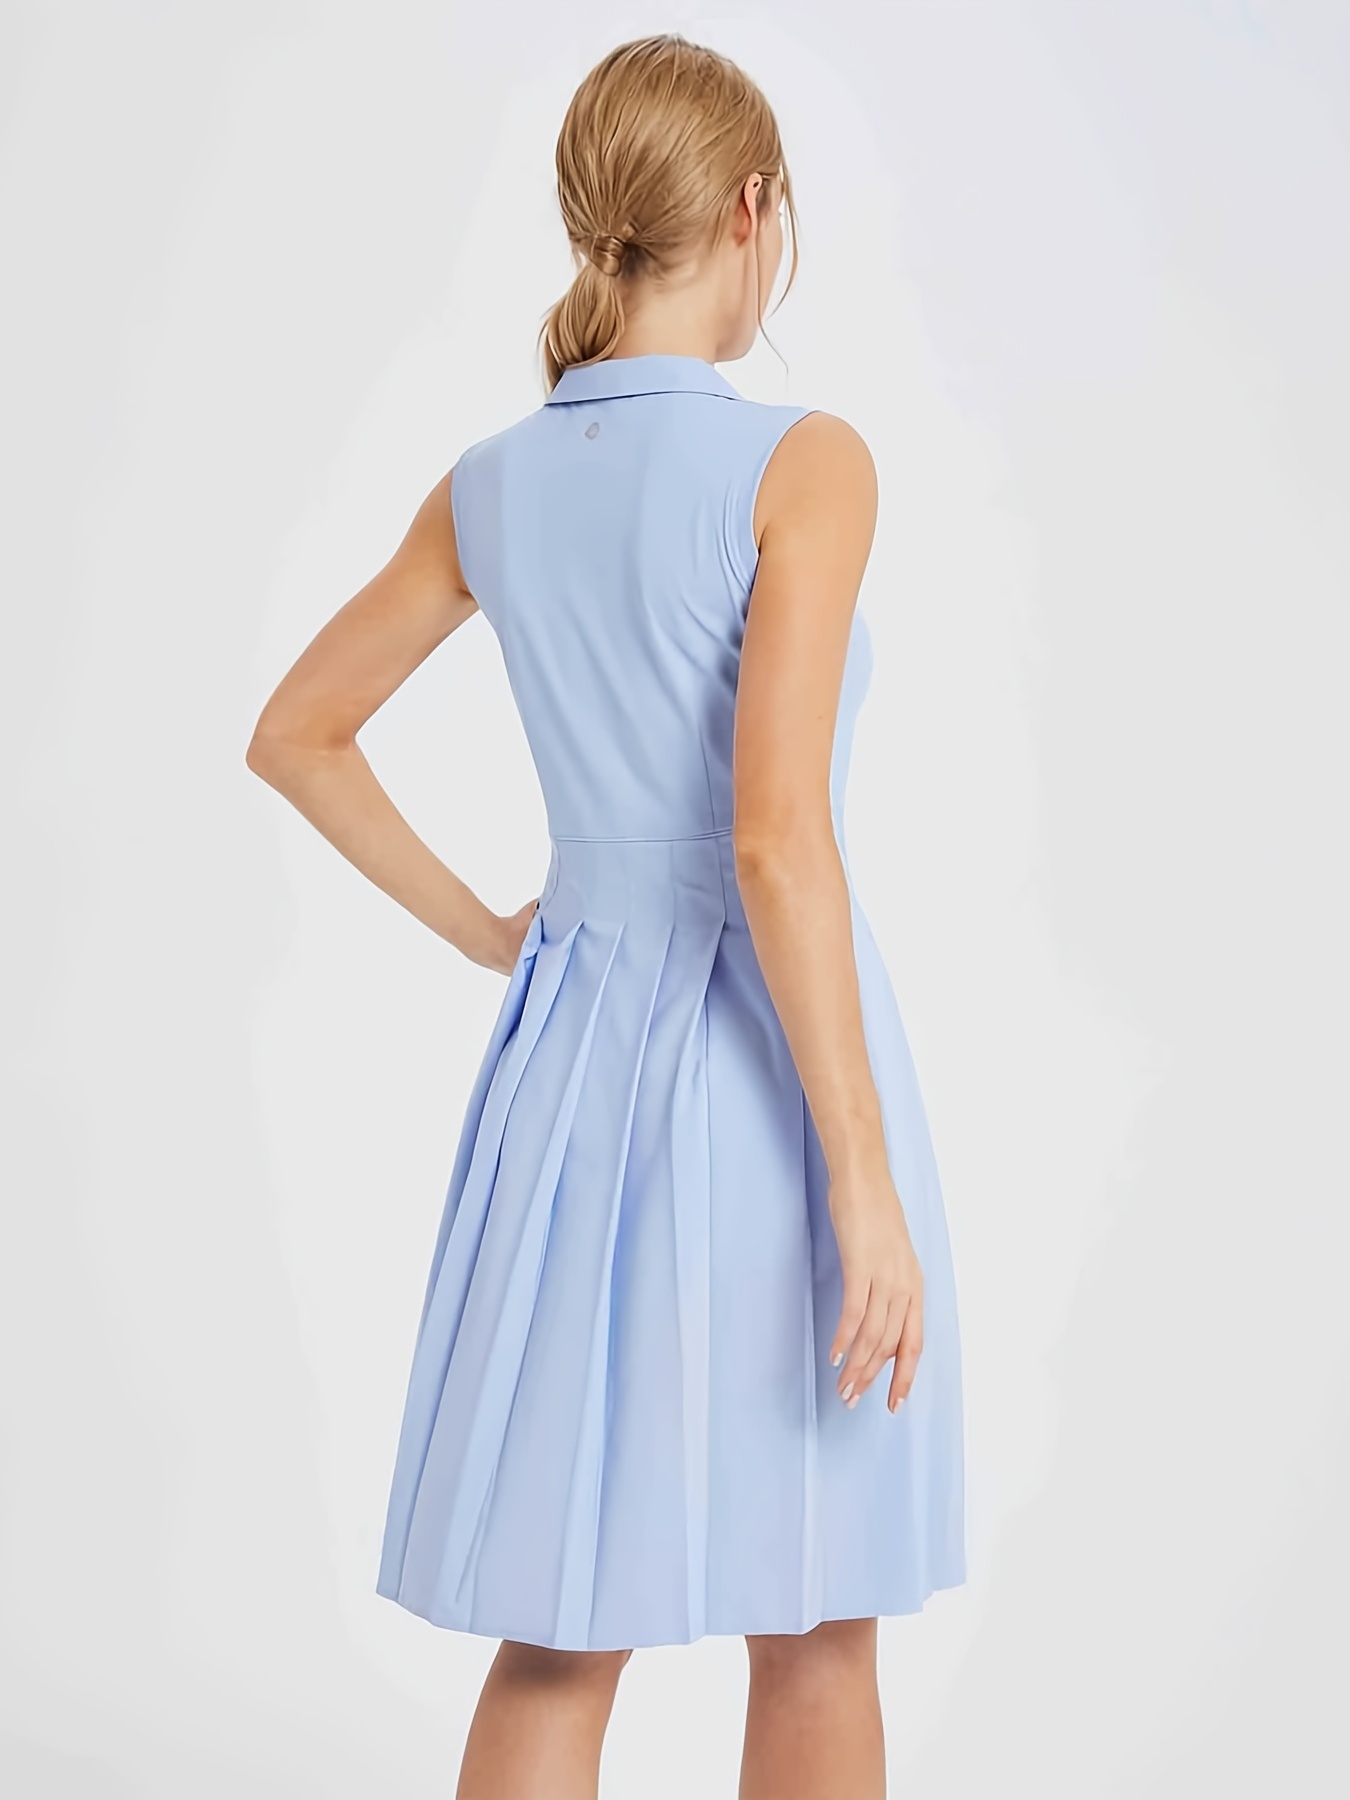 * Women's UPF 50+ Sleeveless Golf Dress with Elegant Pleats and Stretch  Fabric